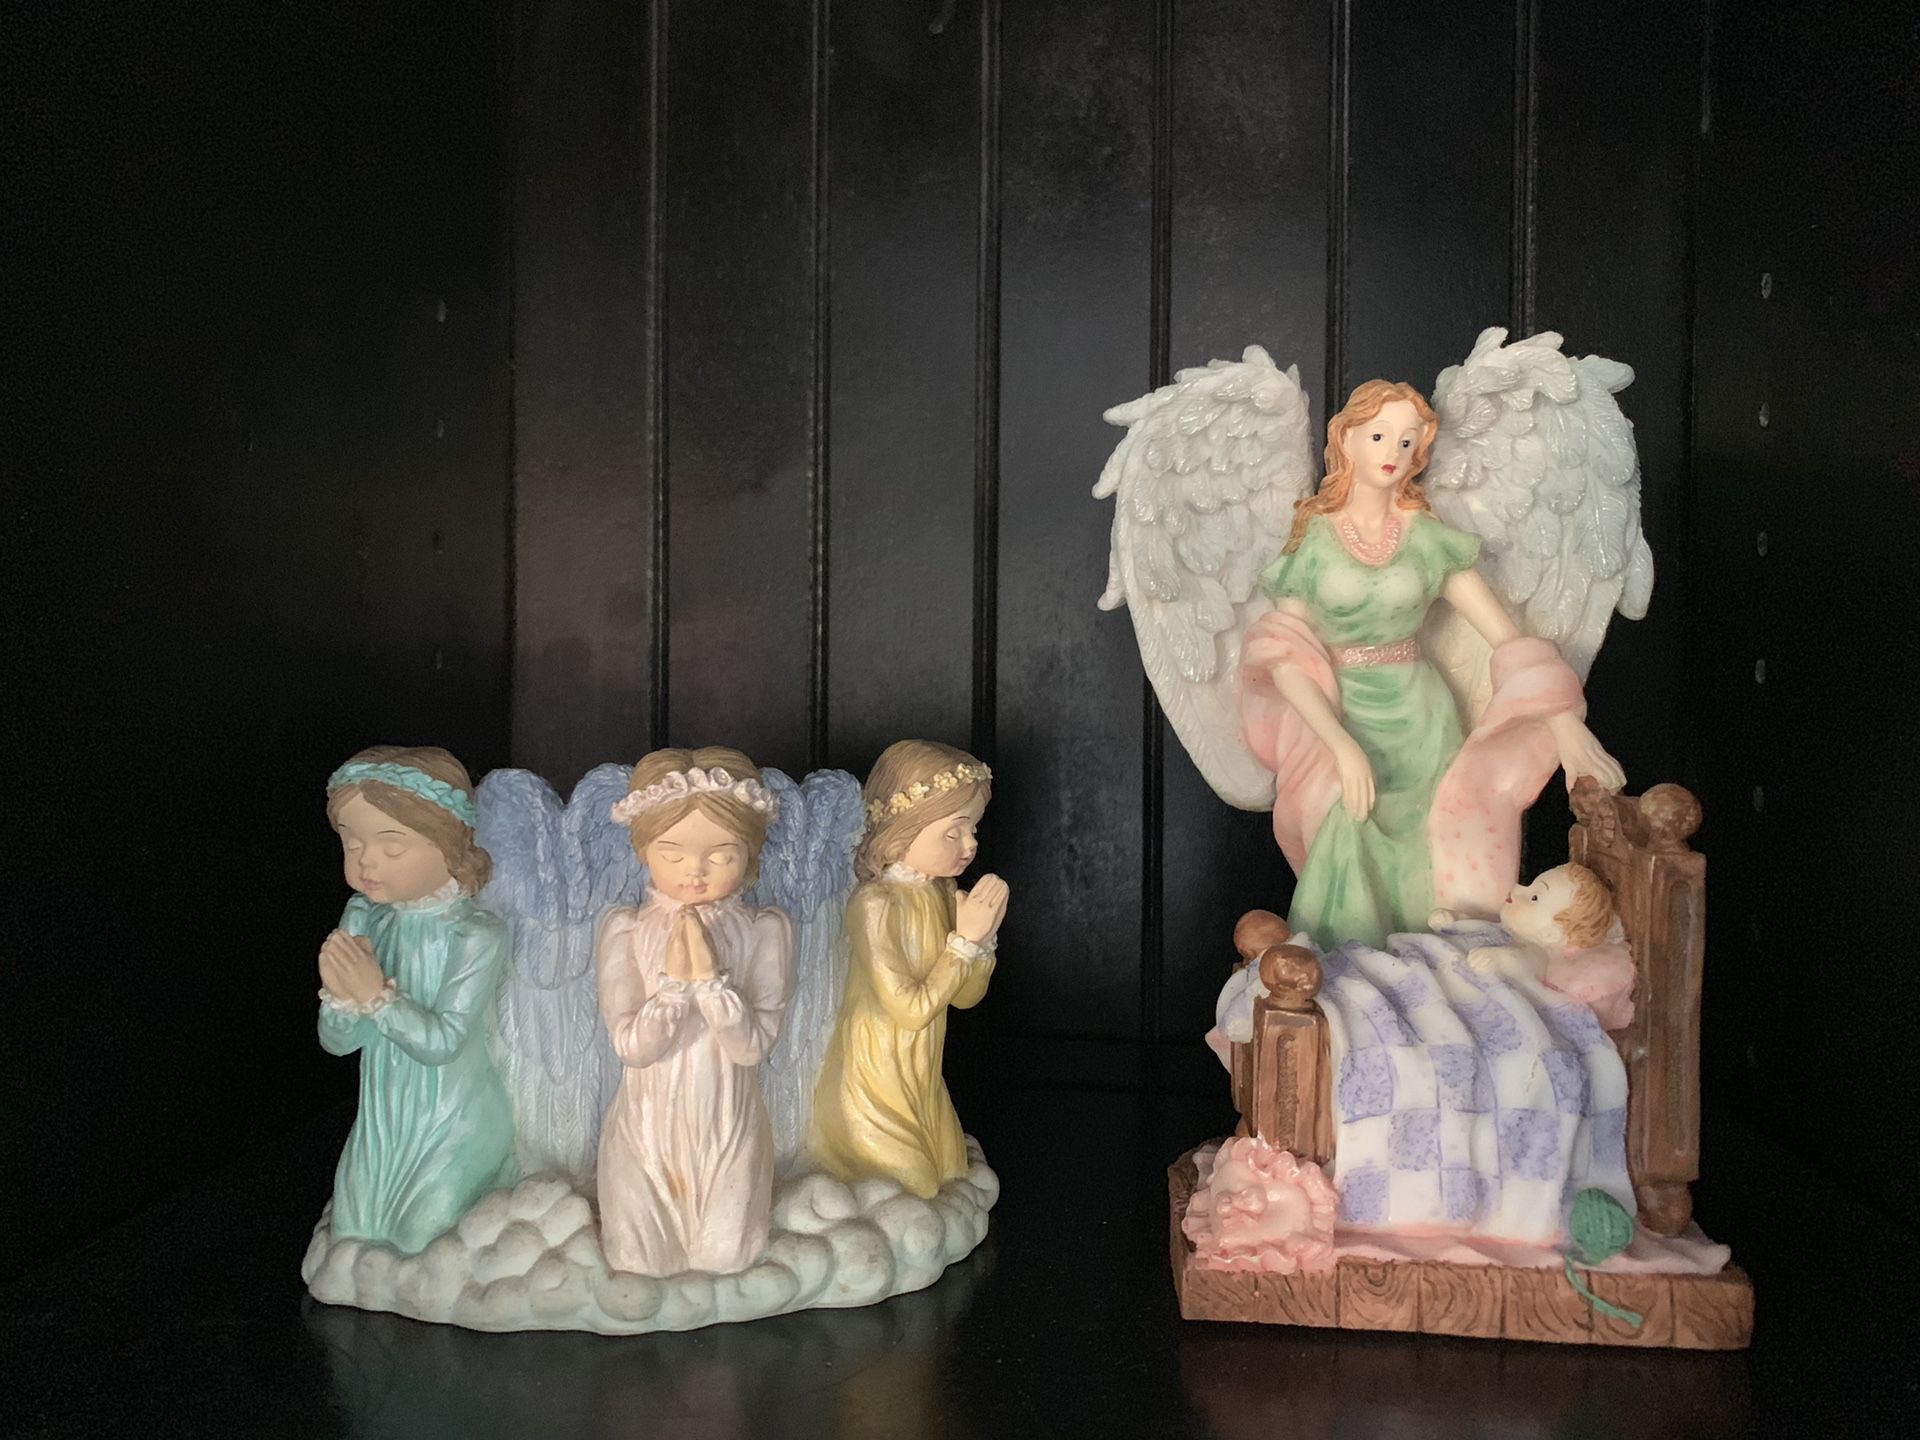 Angel nursery decor baby candle holder